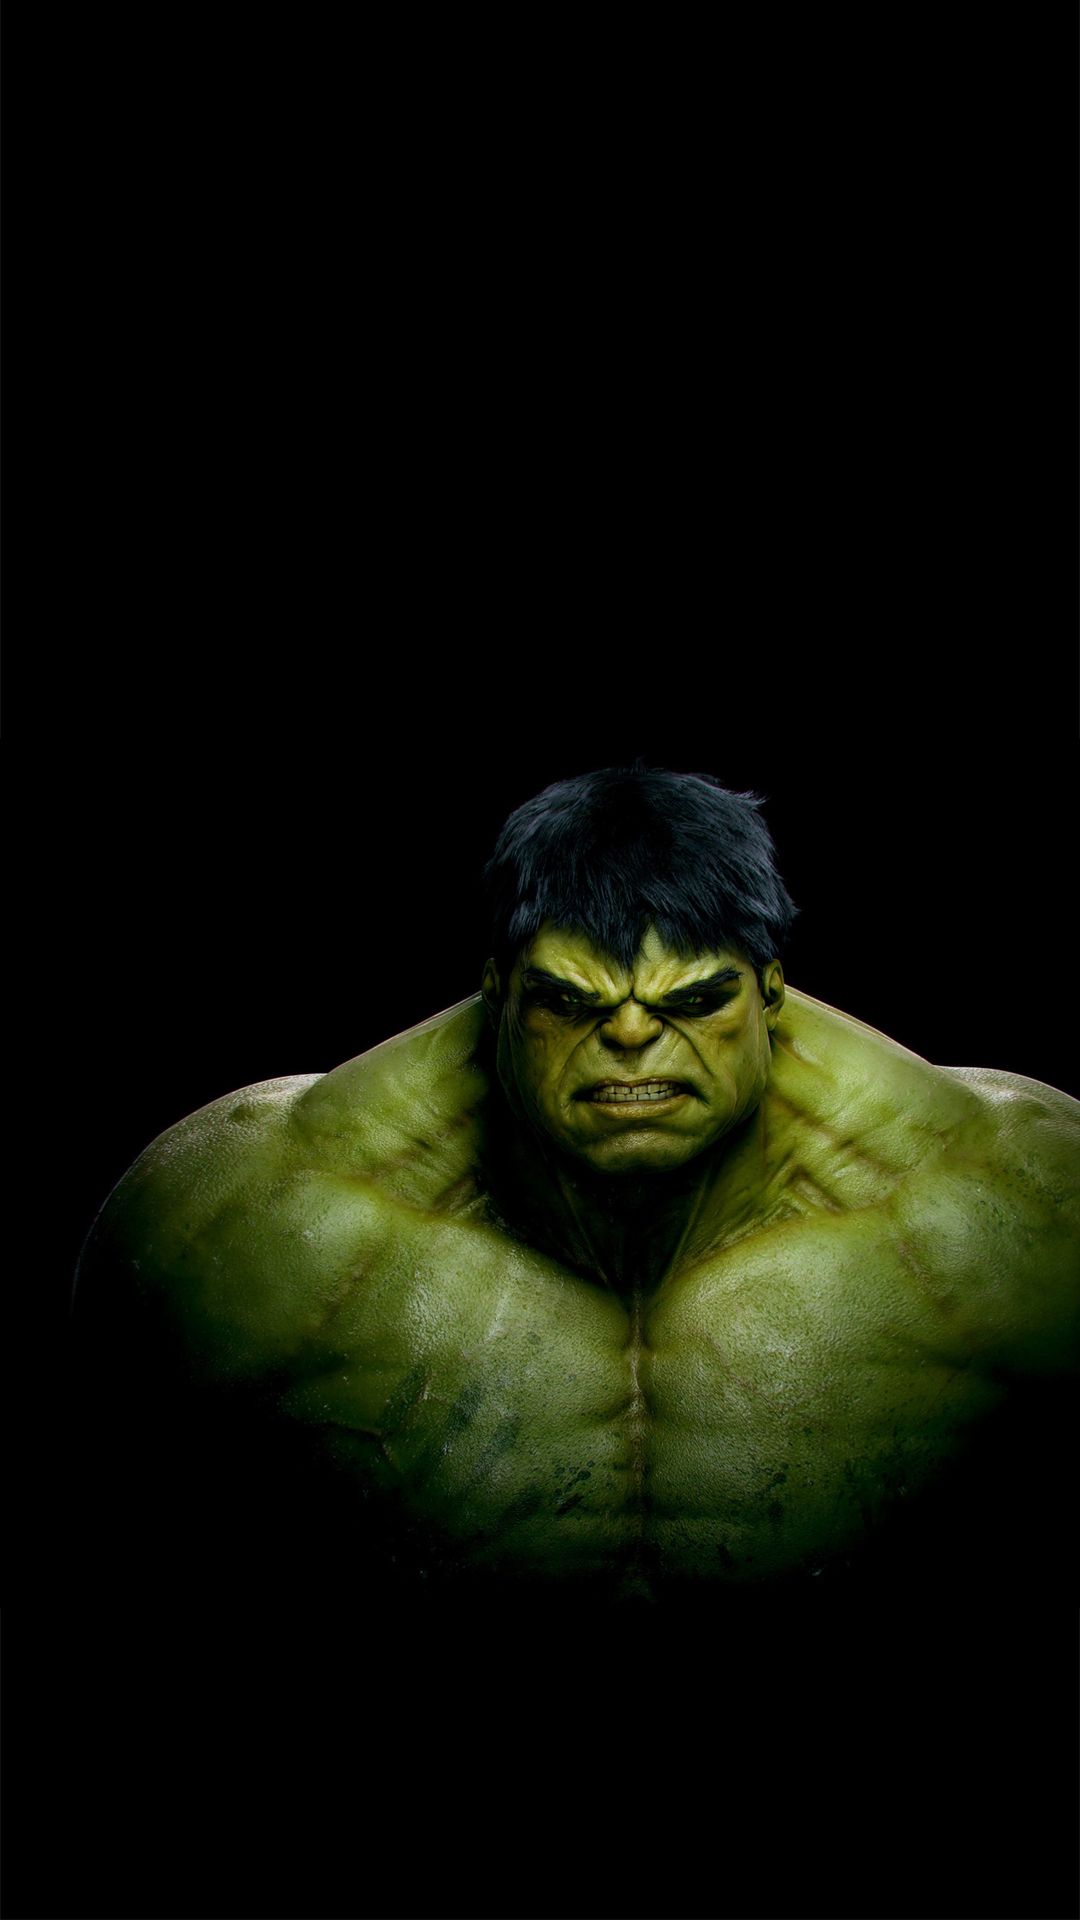 The Incredible Hulk Dark Android Wallpaper free download